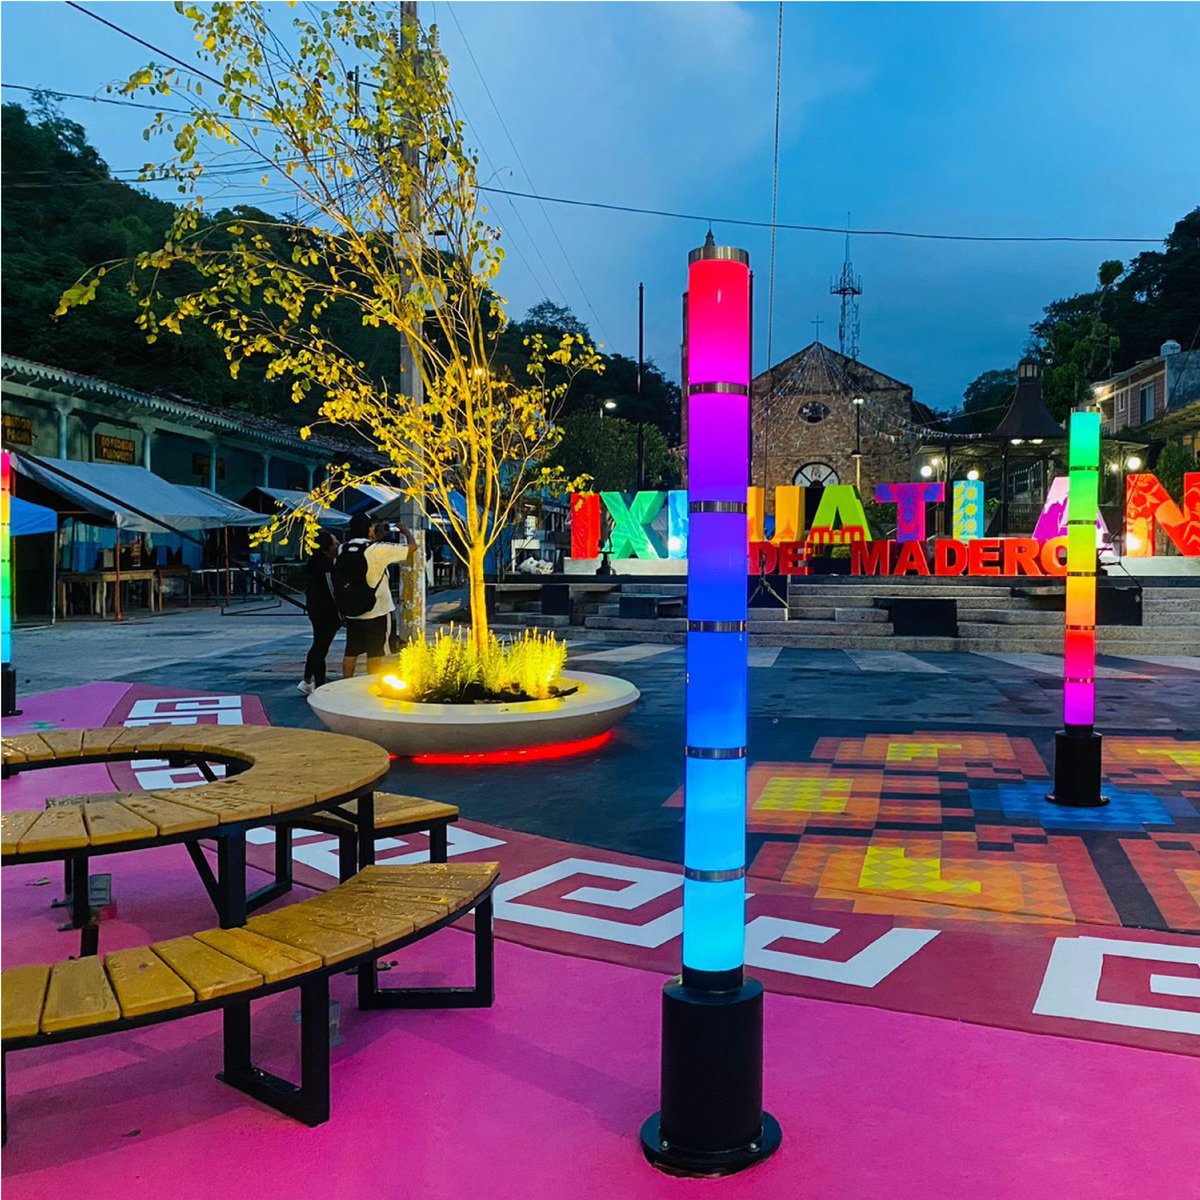 💡¡Haz de tus espacios algo único, algo diferente, algo WOW!
.
.
.
.
.
#inwow #makeitwow #makingplace #innovation #tecnologia #inmersivo #entretenimiento #playground #arquitecturamx #arquitecturamx #diseñodeinteriores #mexico #digitalart #light #experience #lightshow #nature